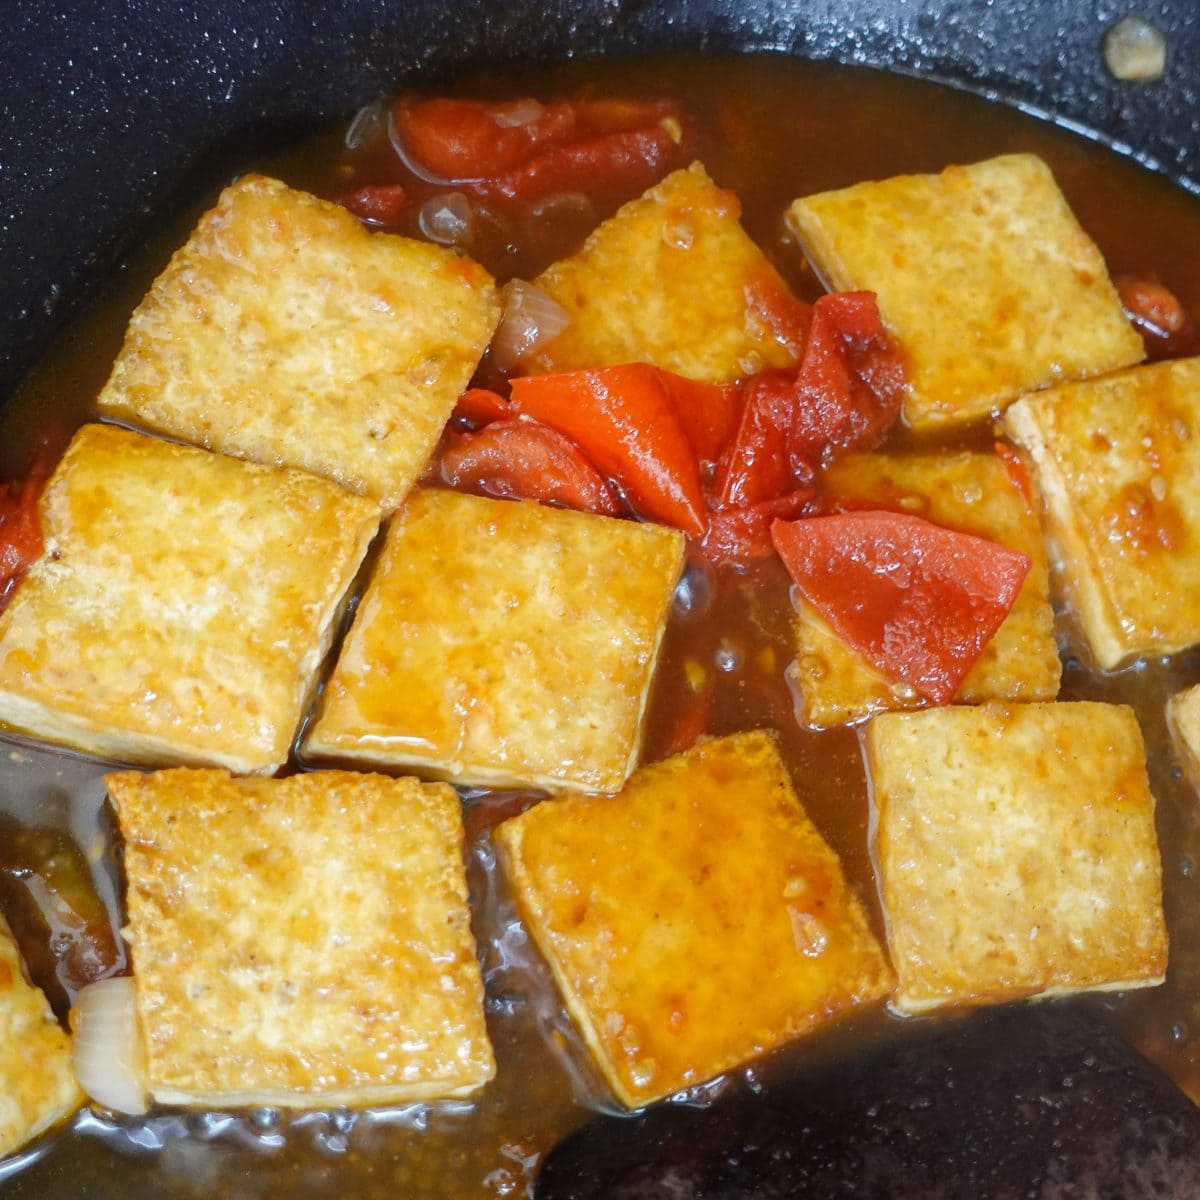 Add in the tofu and seasonings